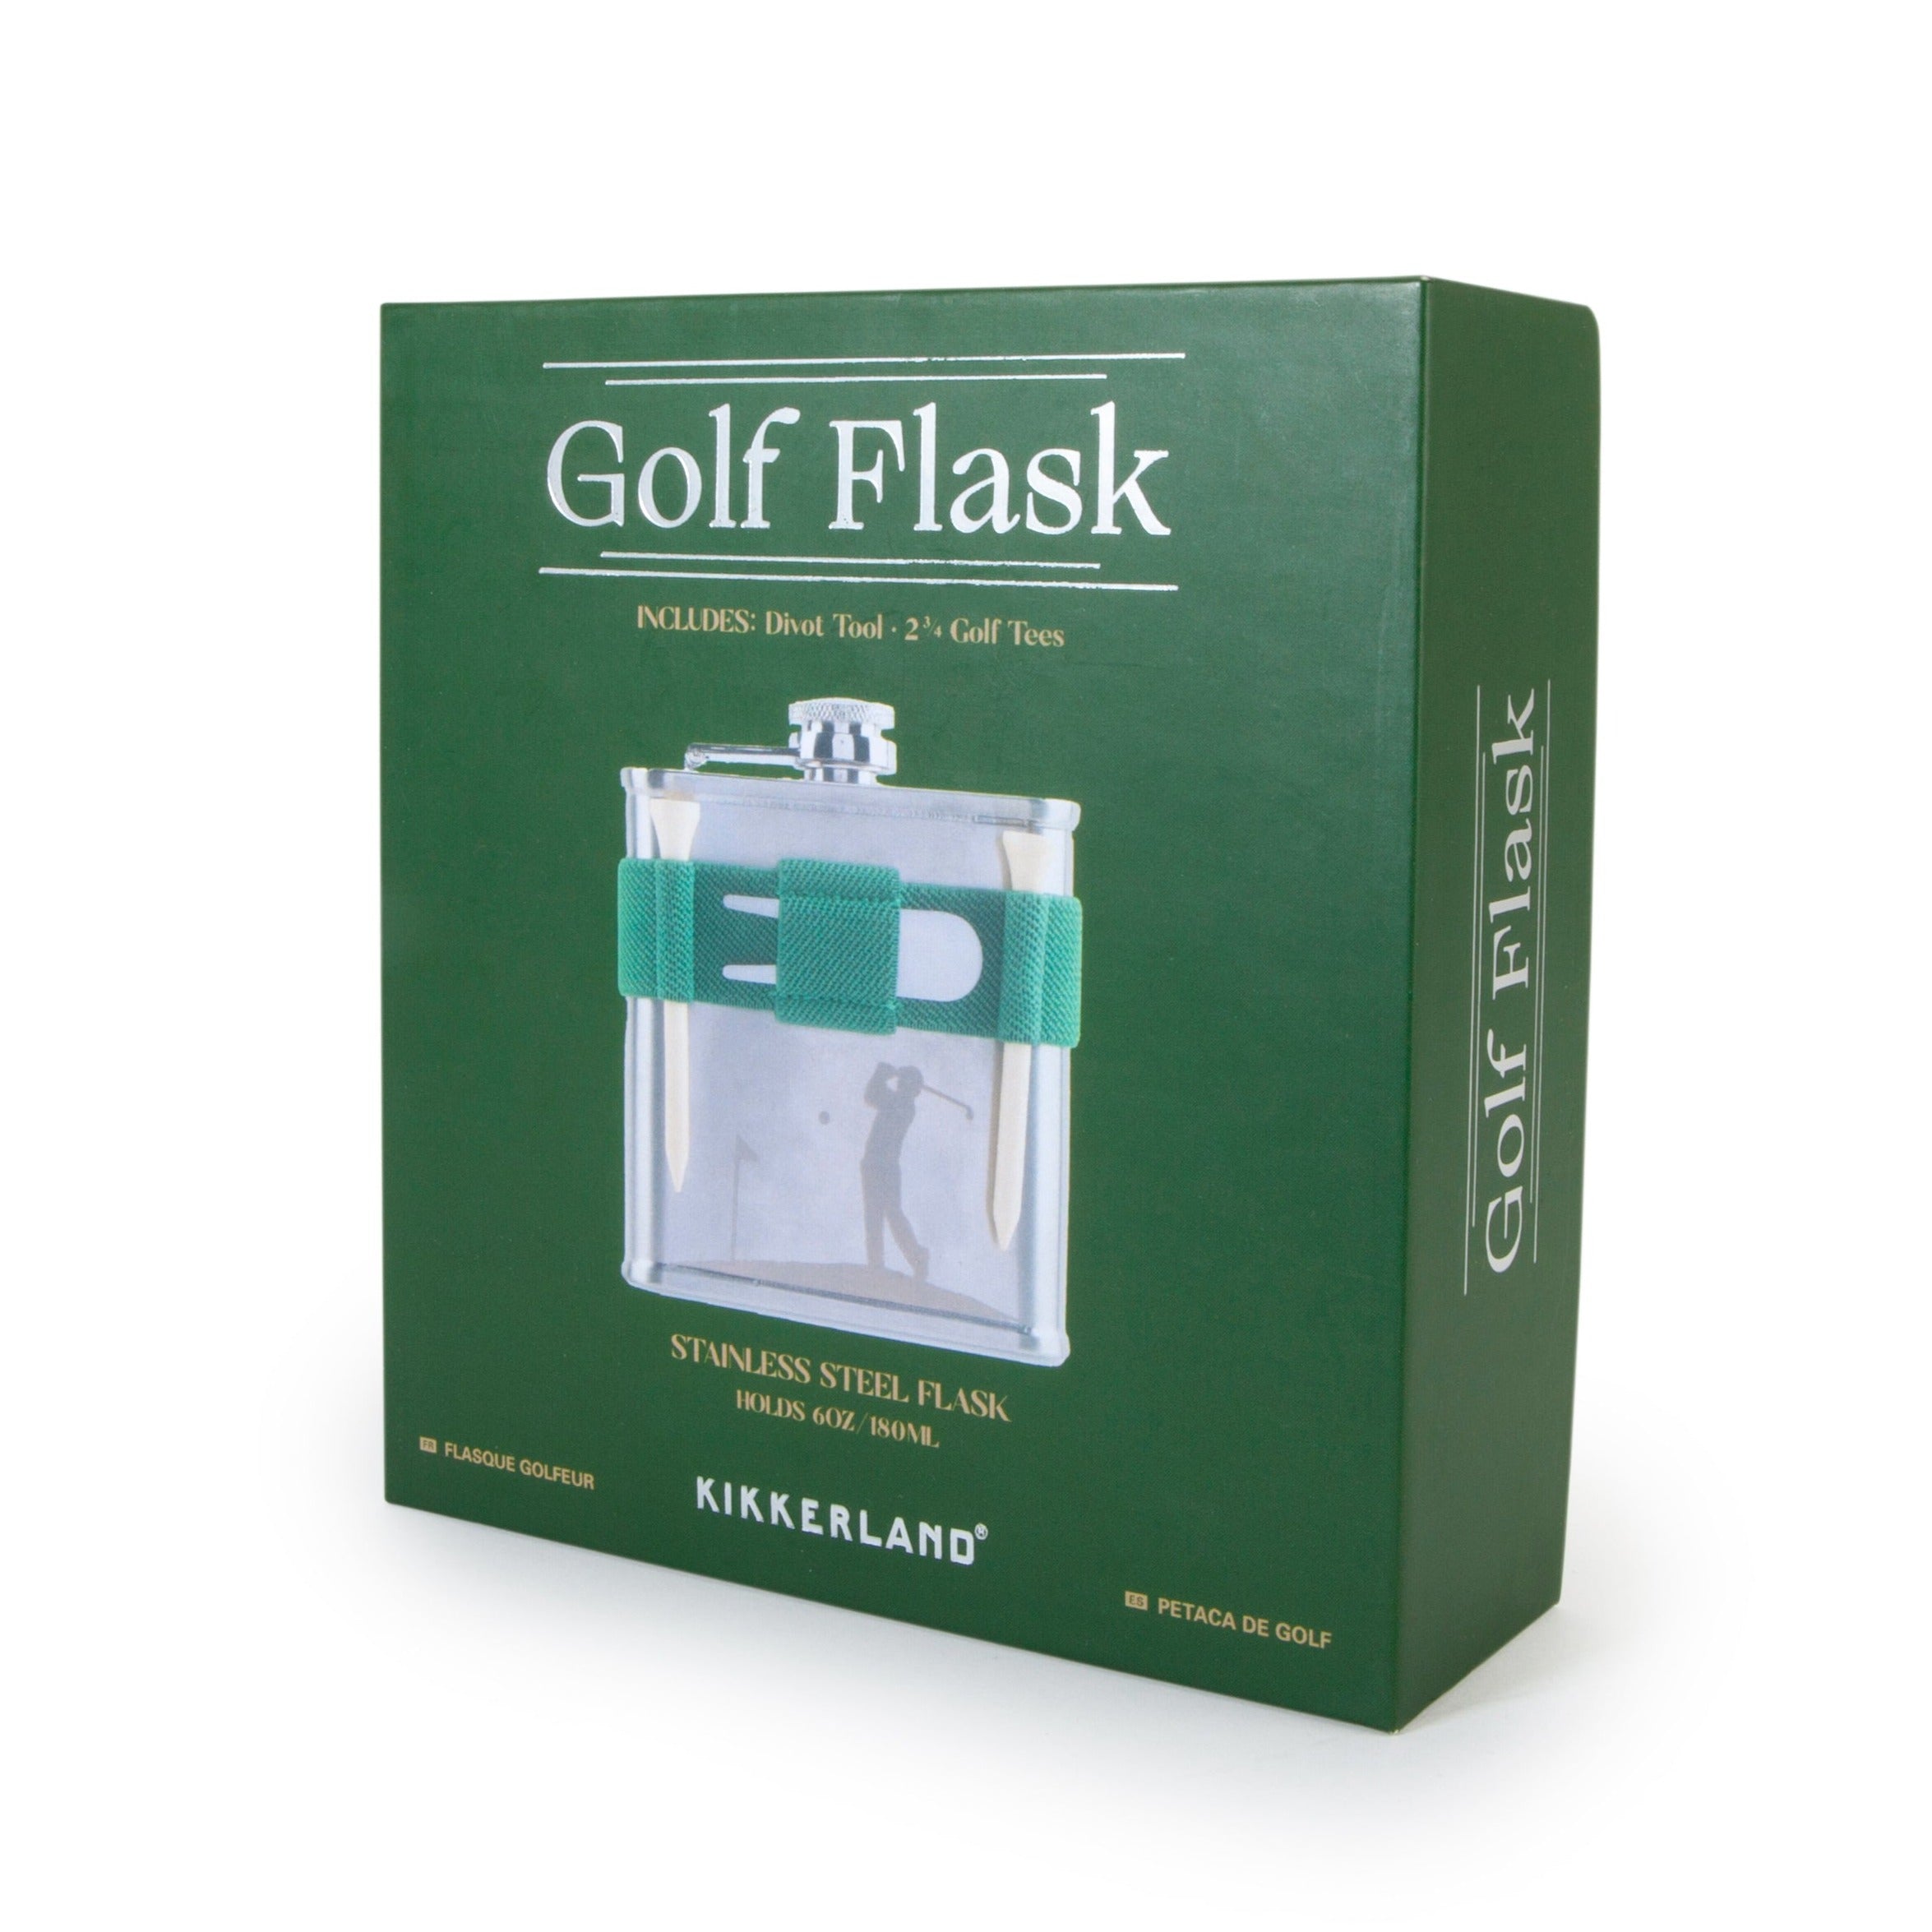 Kikkerland Golf Flask – 6oz.